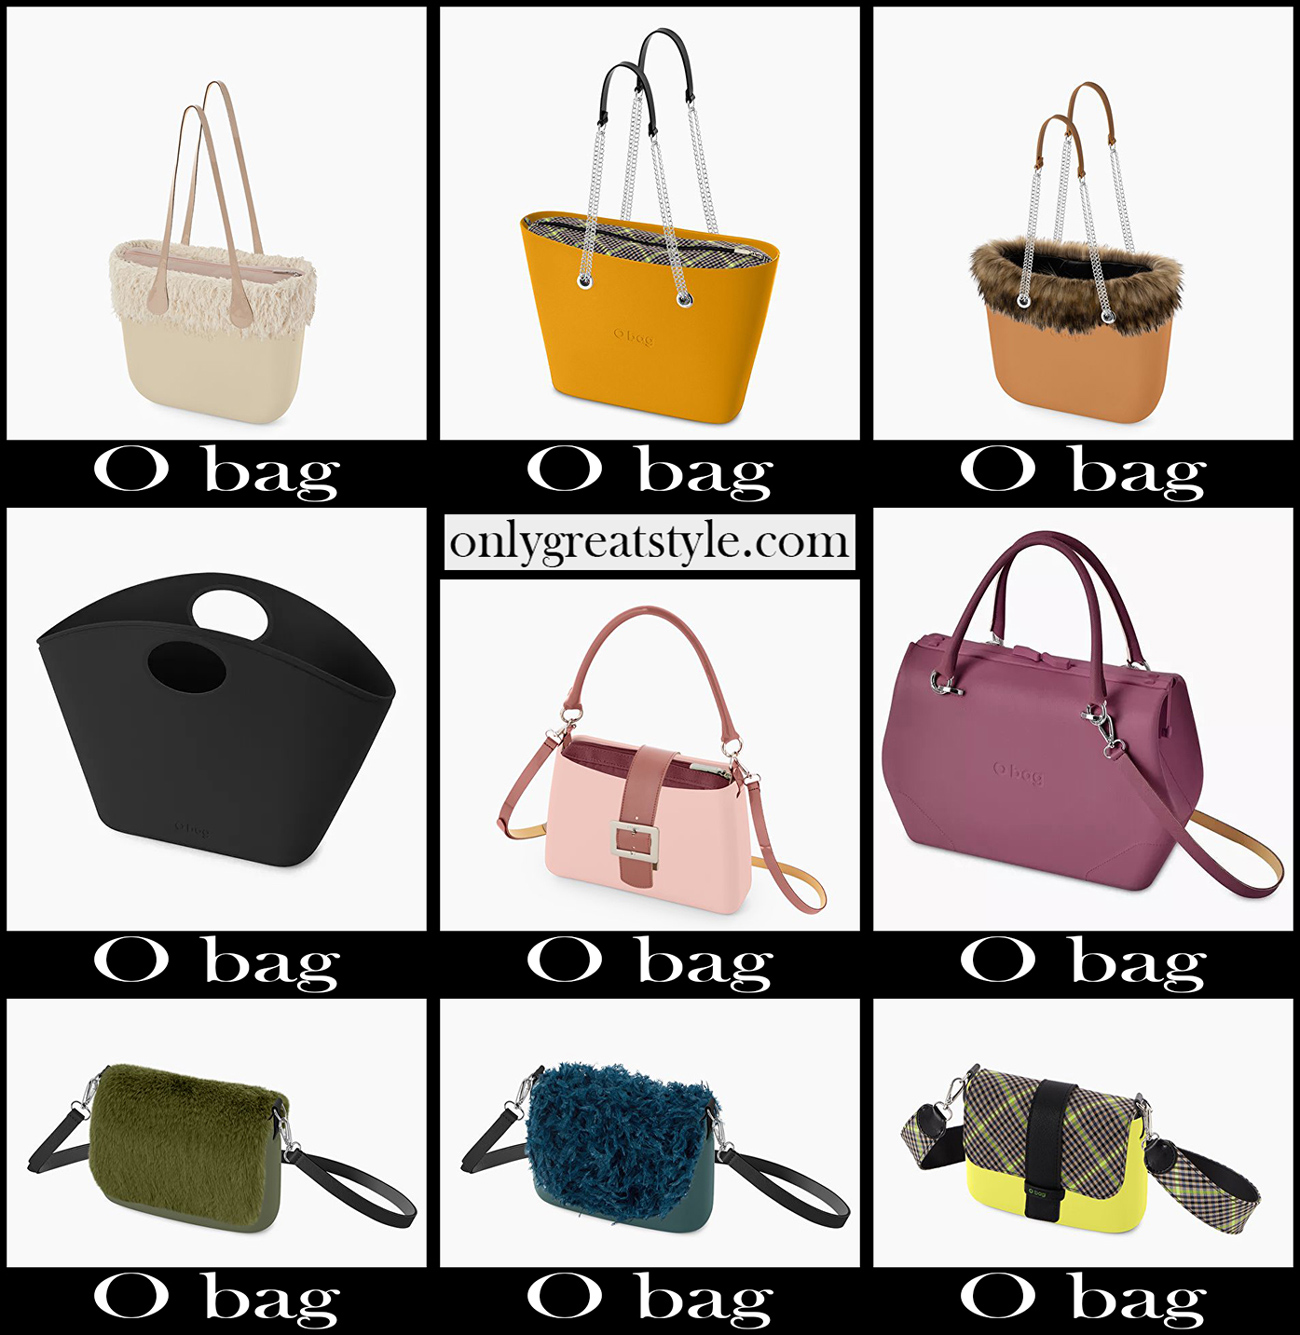 O bag bags 2021 new arrivals womens handbags